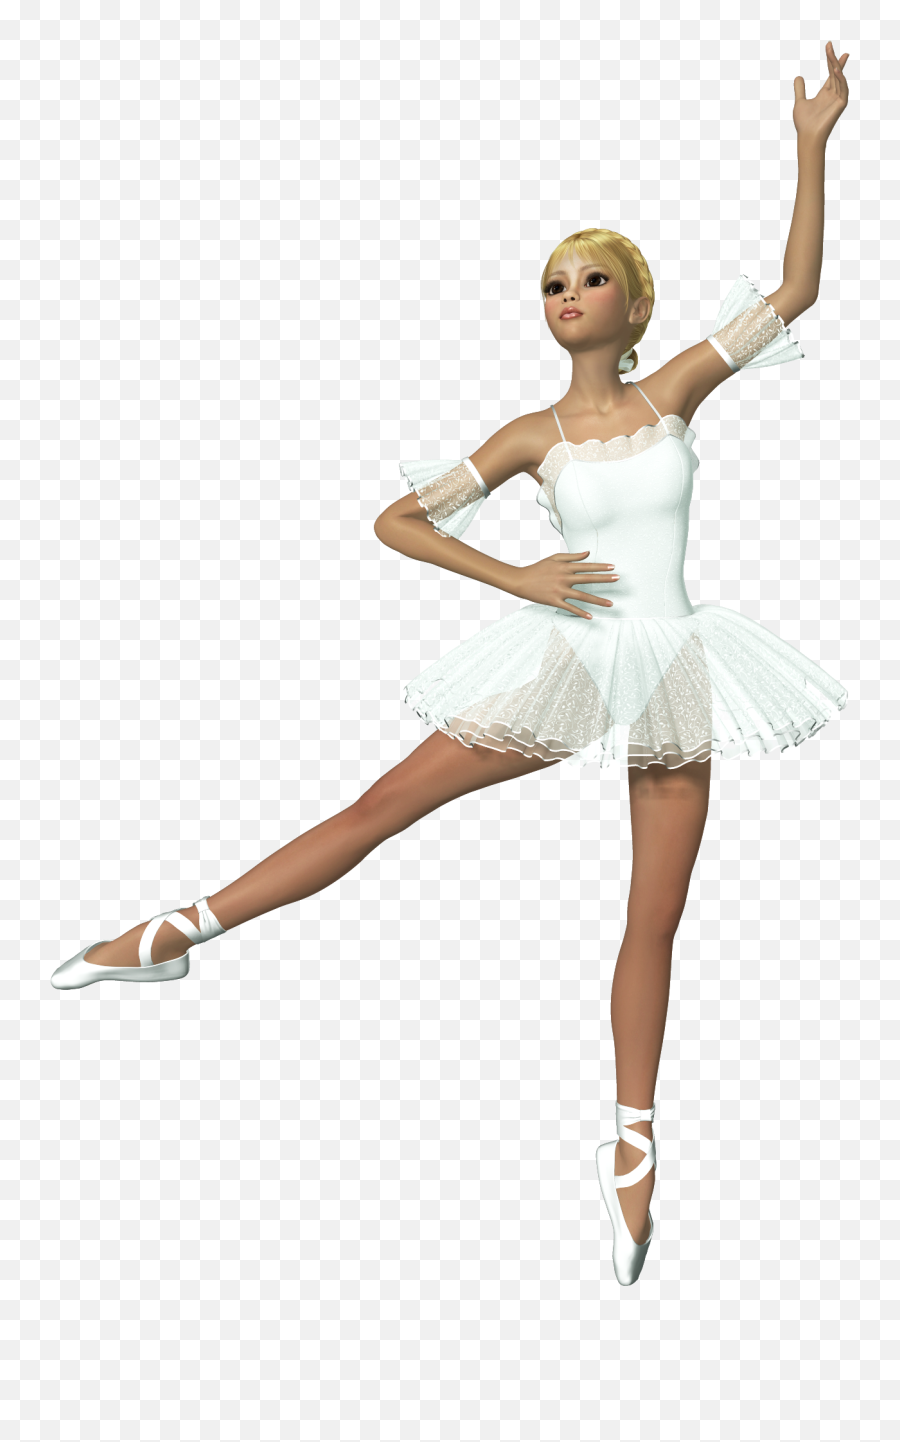 Free Ballet Png U0026 Free Balletpng Transparent Images 18471 - Transparent Ballerina Emoji,Ballet Clipart Free Download For Use As Emojis